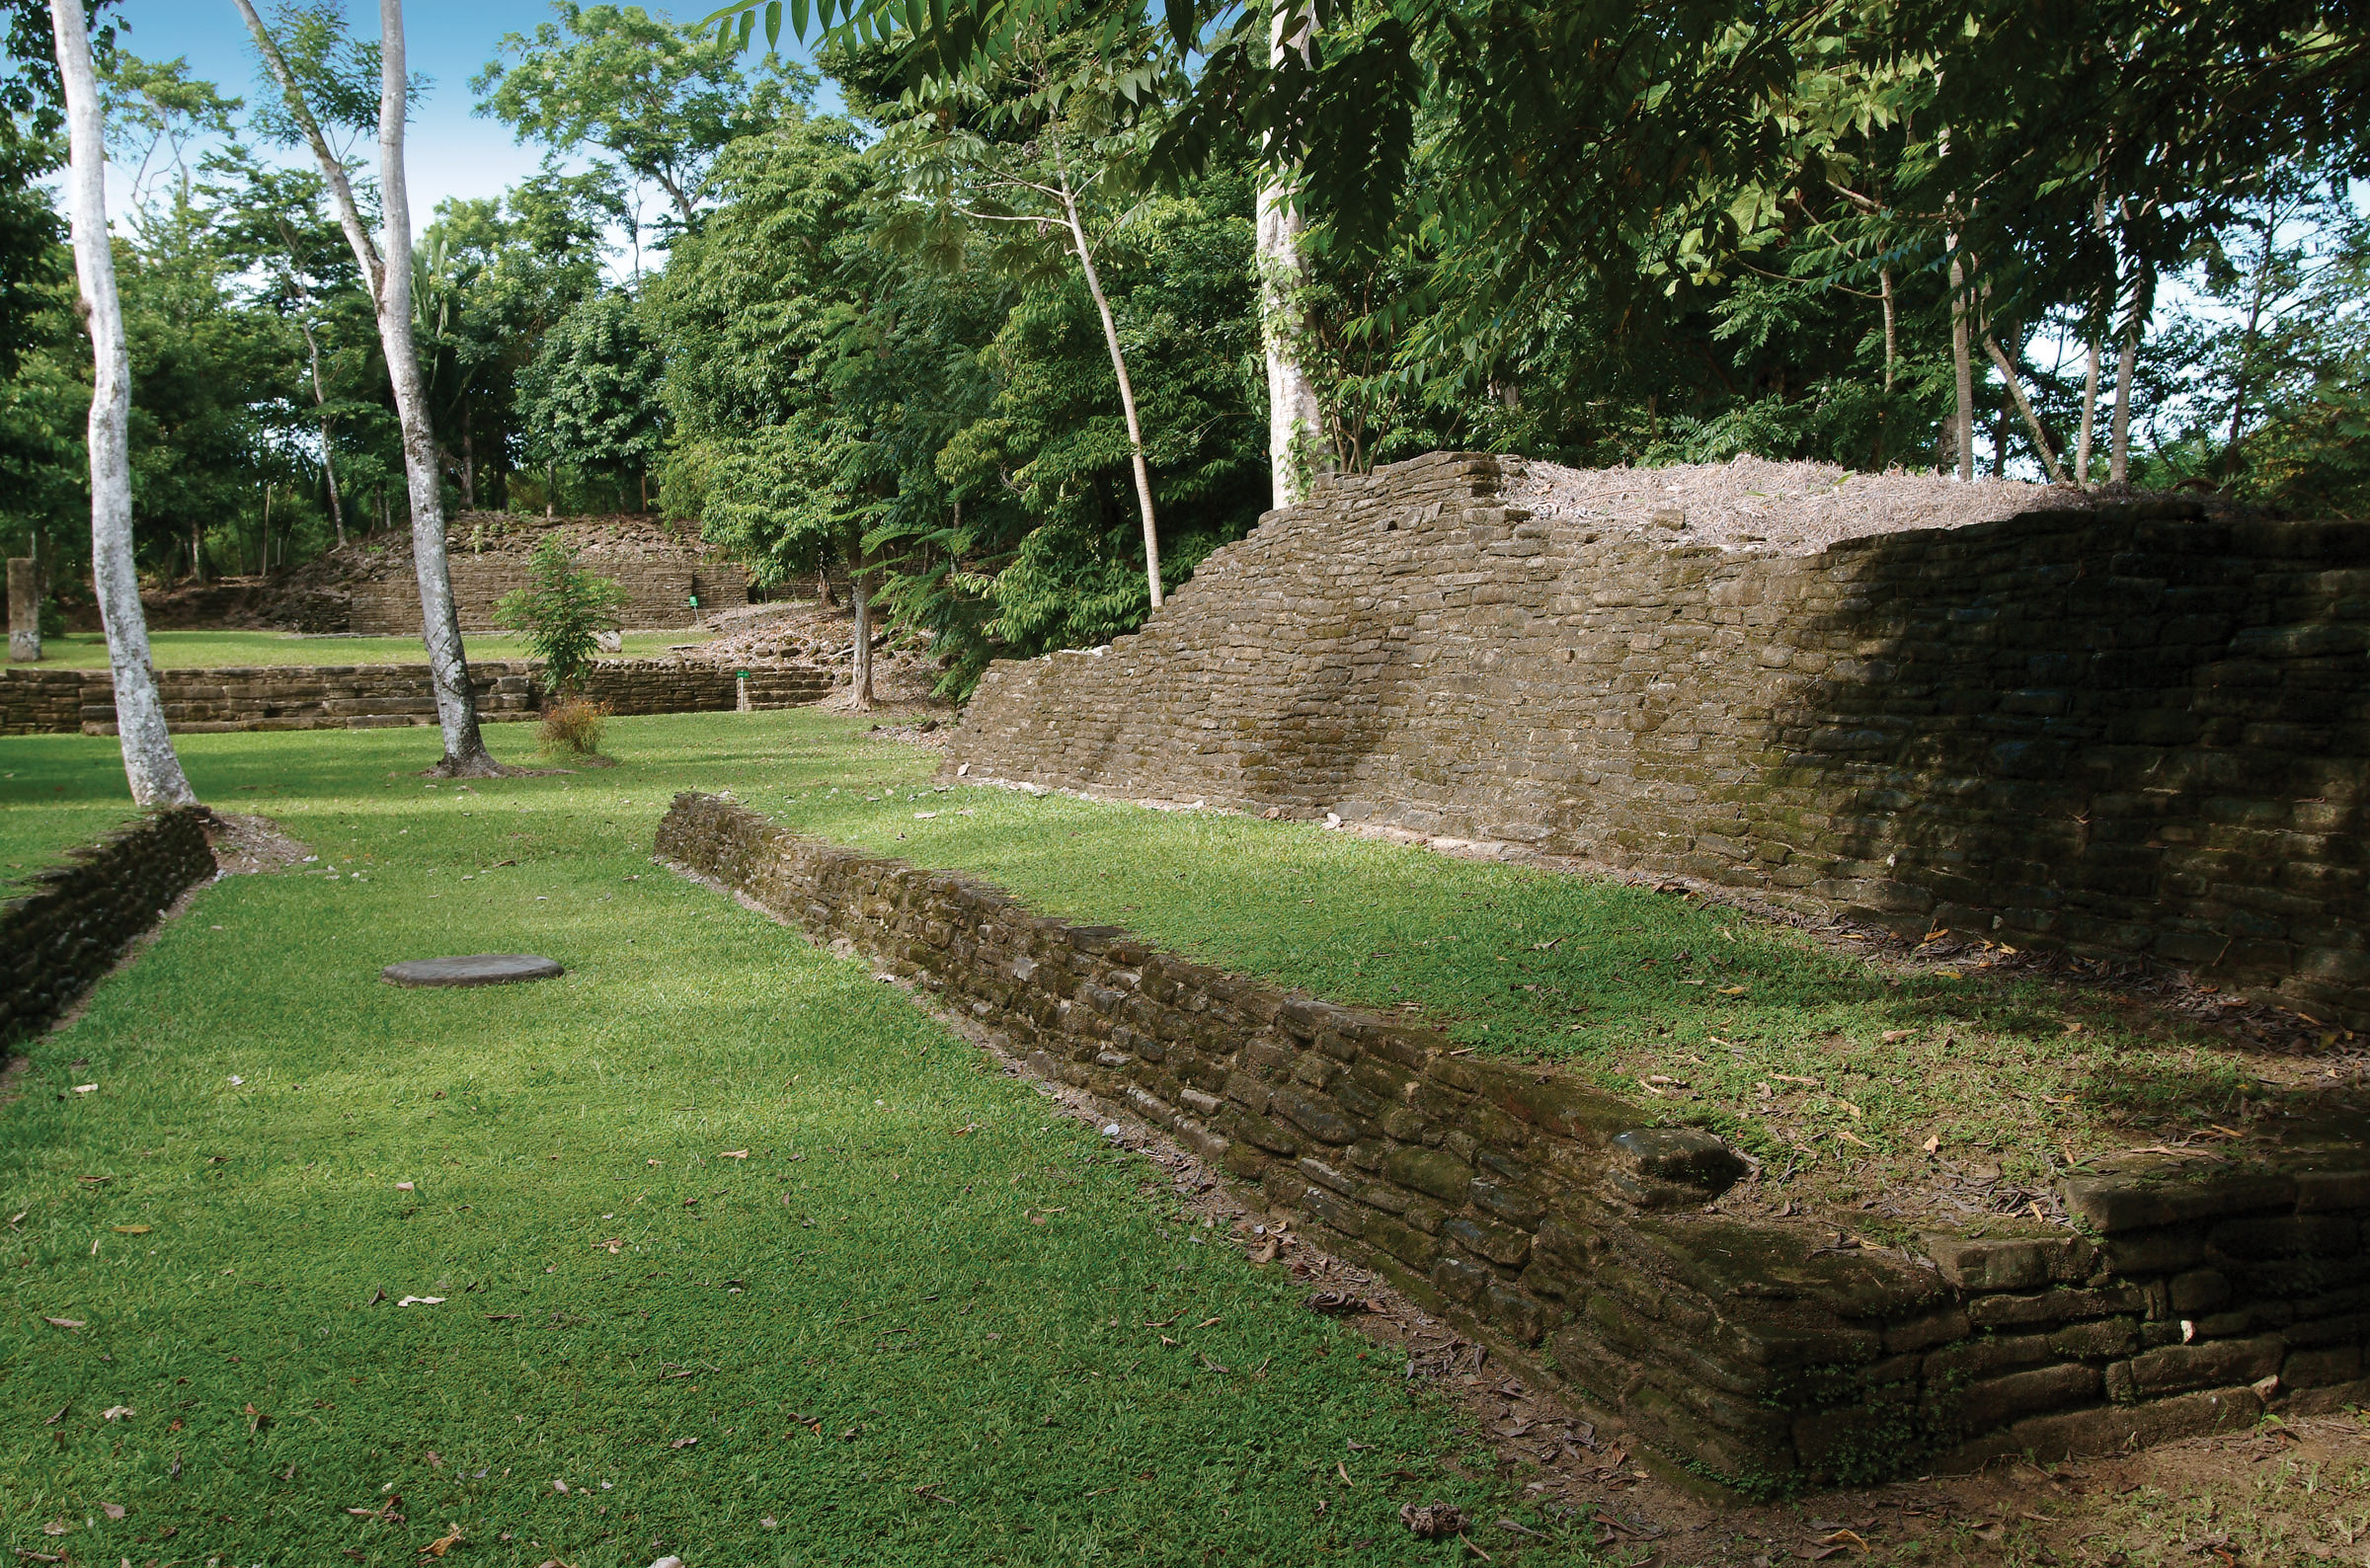 Maya Ruins of Southern Belize